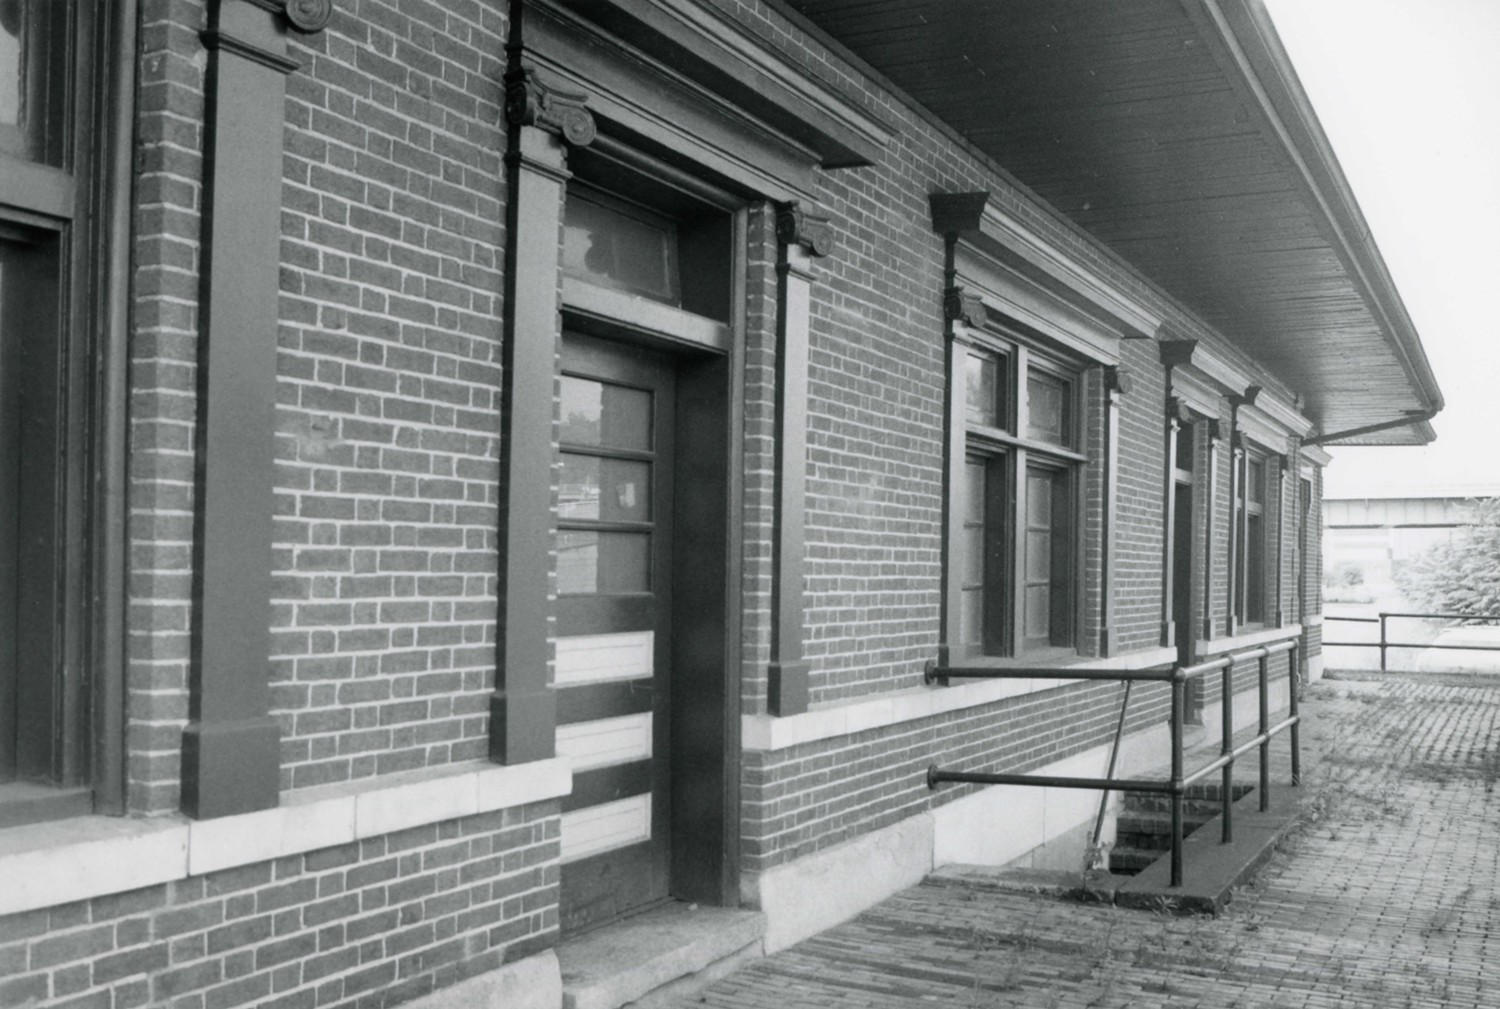 Homestead Pennsylvania Railroad Station, Homestead Pennsylvania Northwest elevation (rear) (1985)